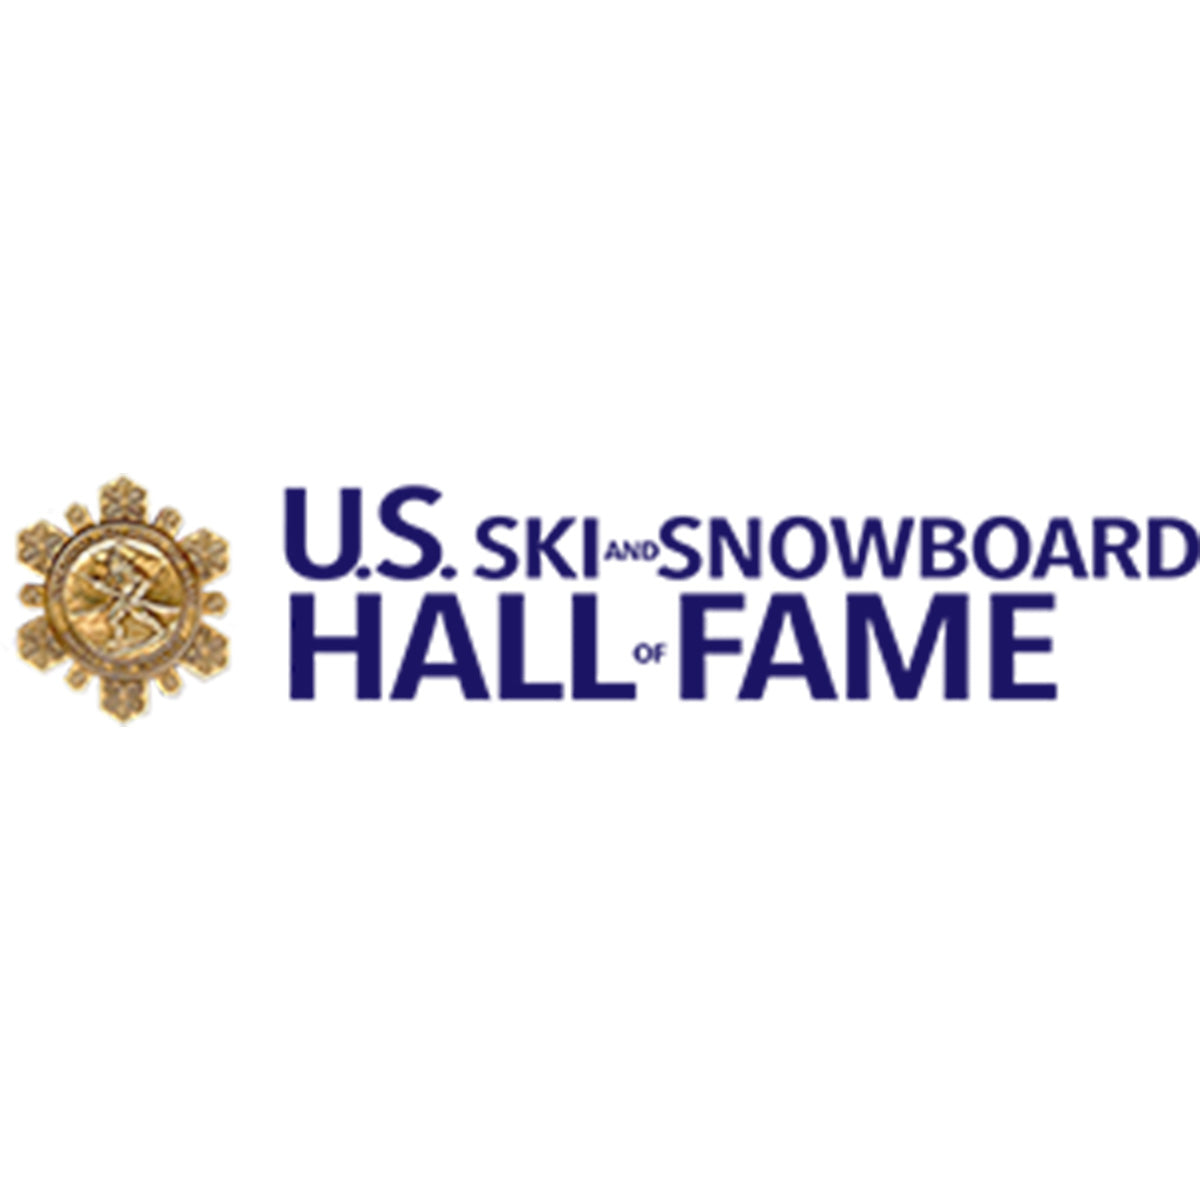 U.S. Ski and Snowboard Hall of Fame